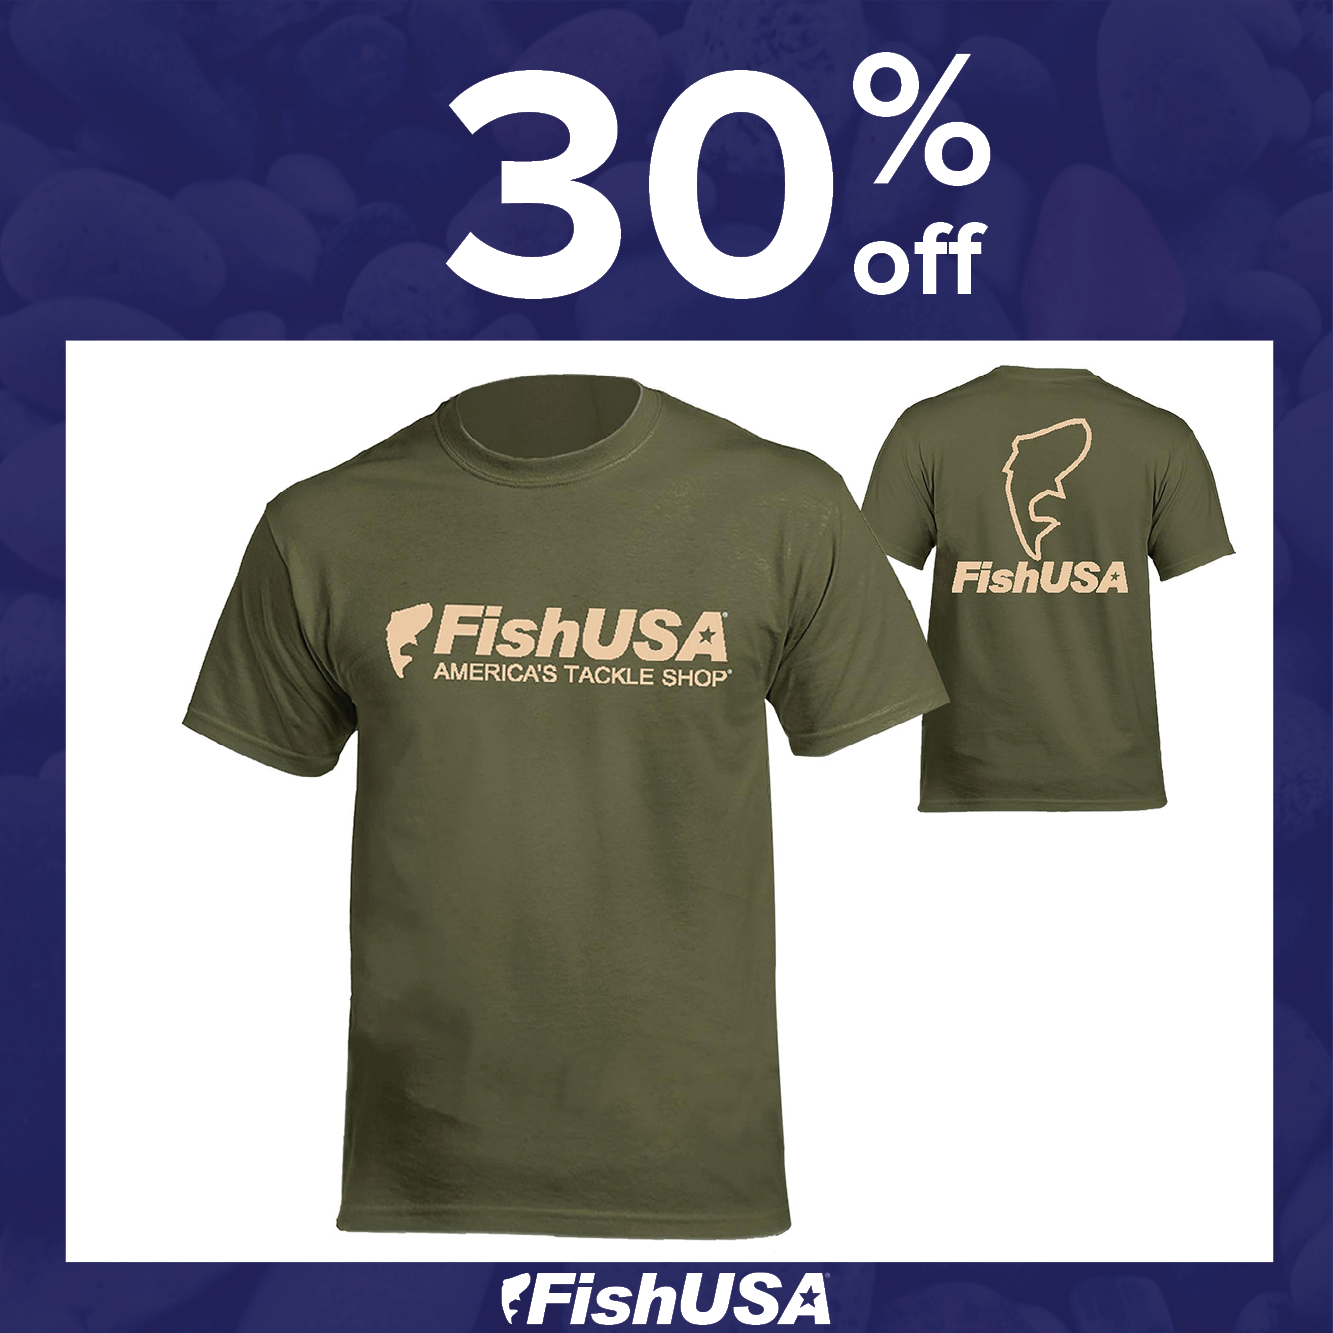 Take 30% off the FishUSA Logo T-Shirt